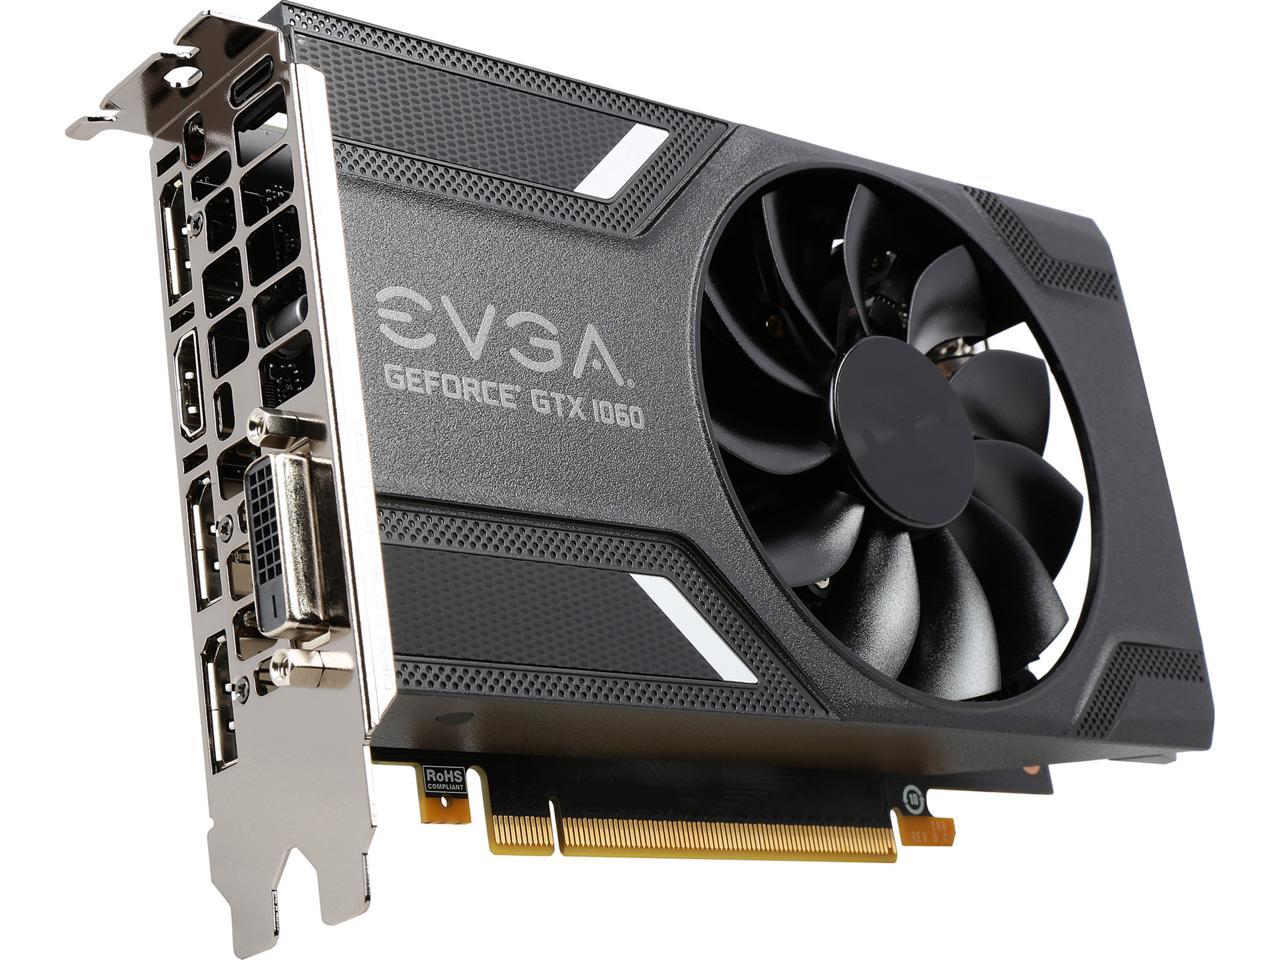 EVGA Geforce GTX 1060 6GB Mini Graphics Card GPU Nvidia /w Original Box